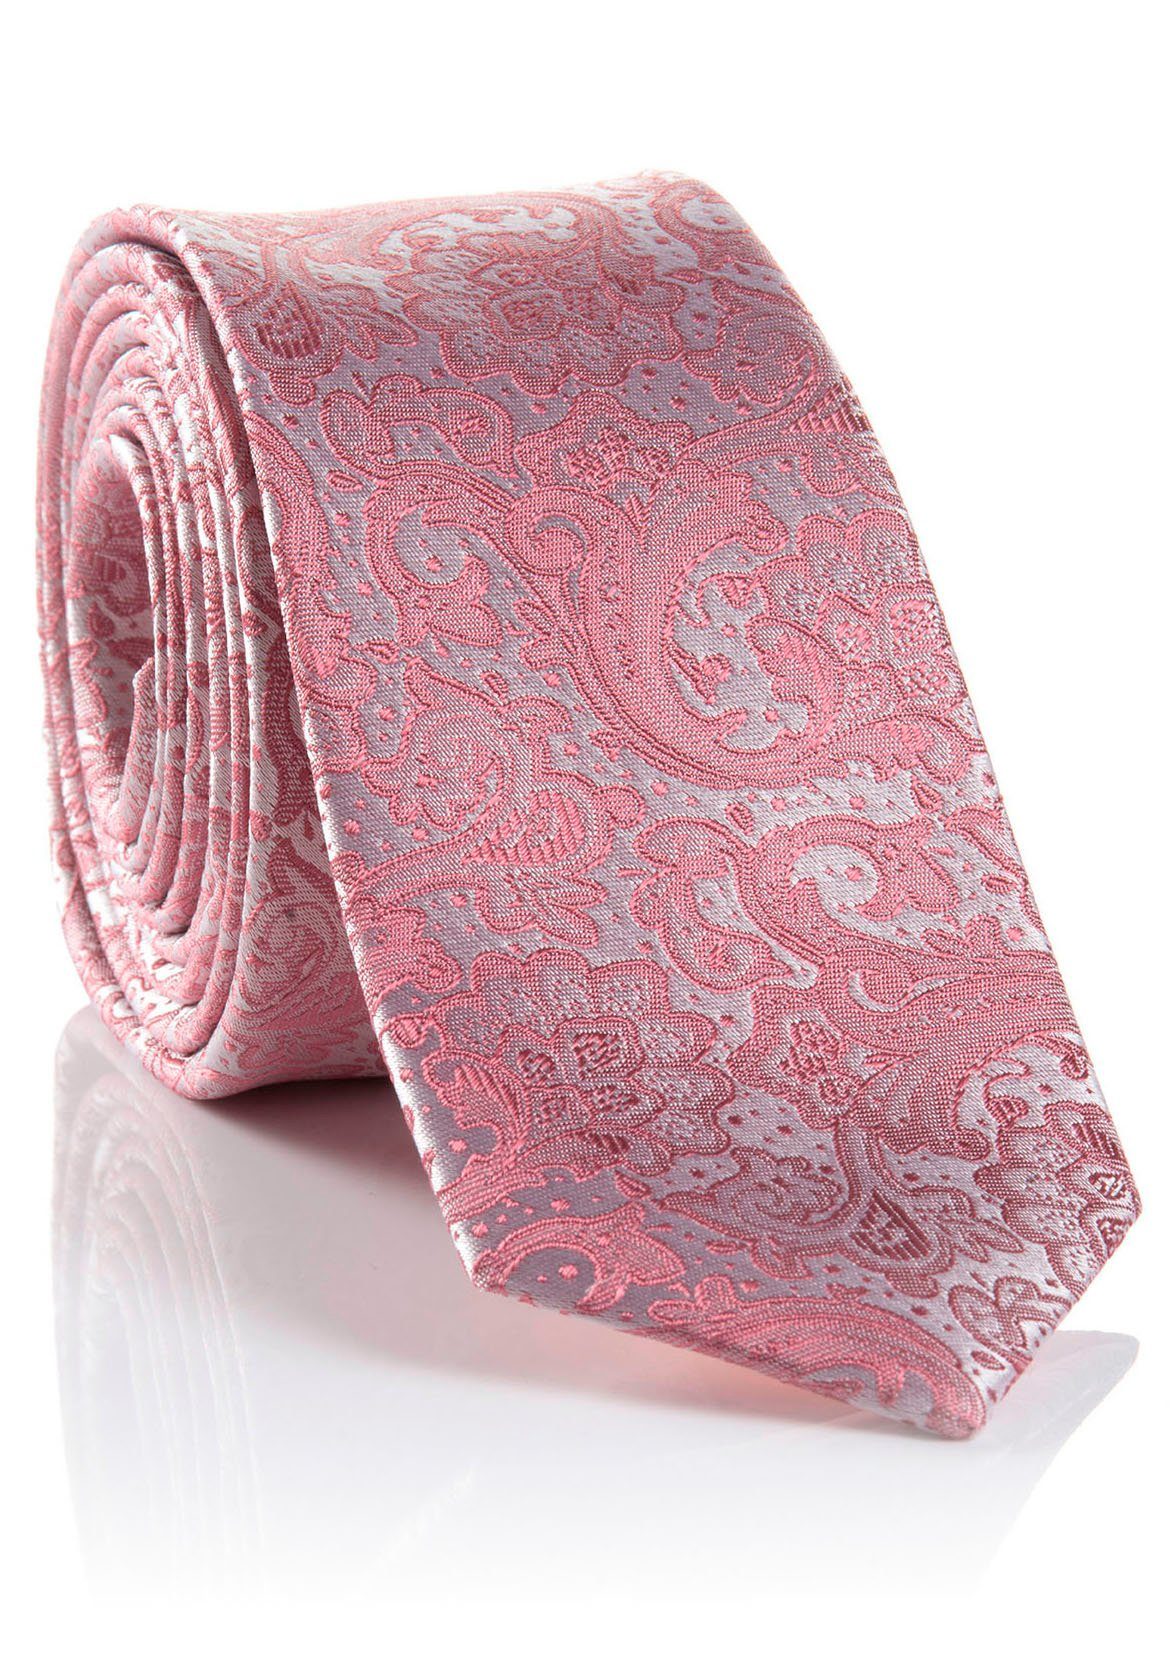 MONTI Krawatte LELIO Krawatte aus reiner Seide, Paisley-Muster